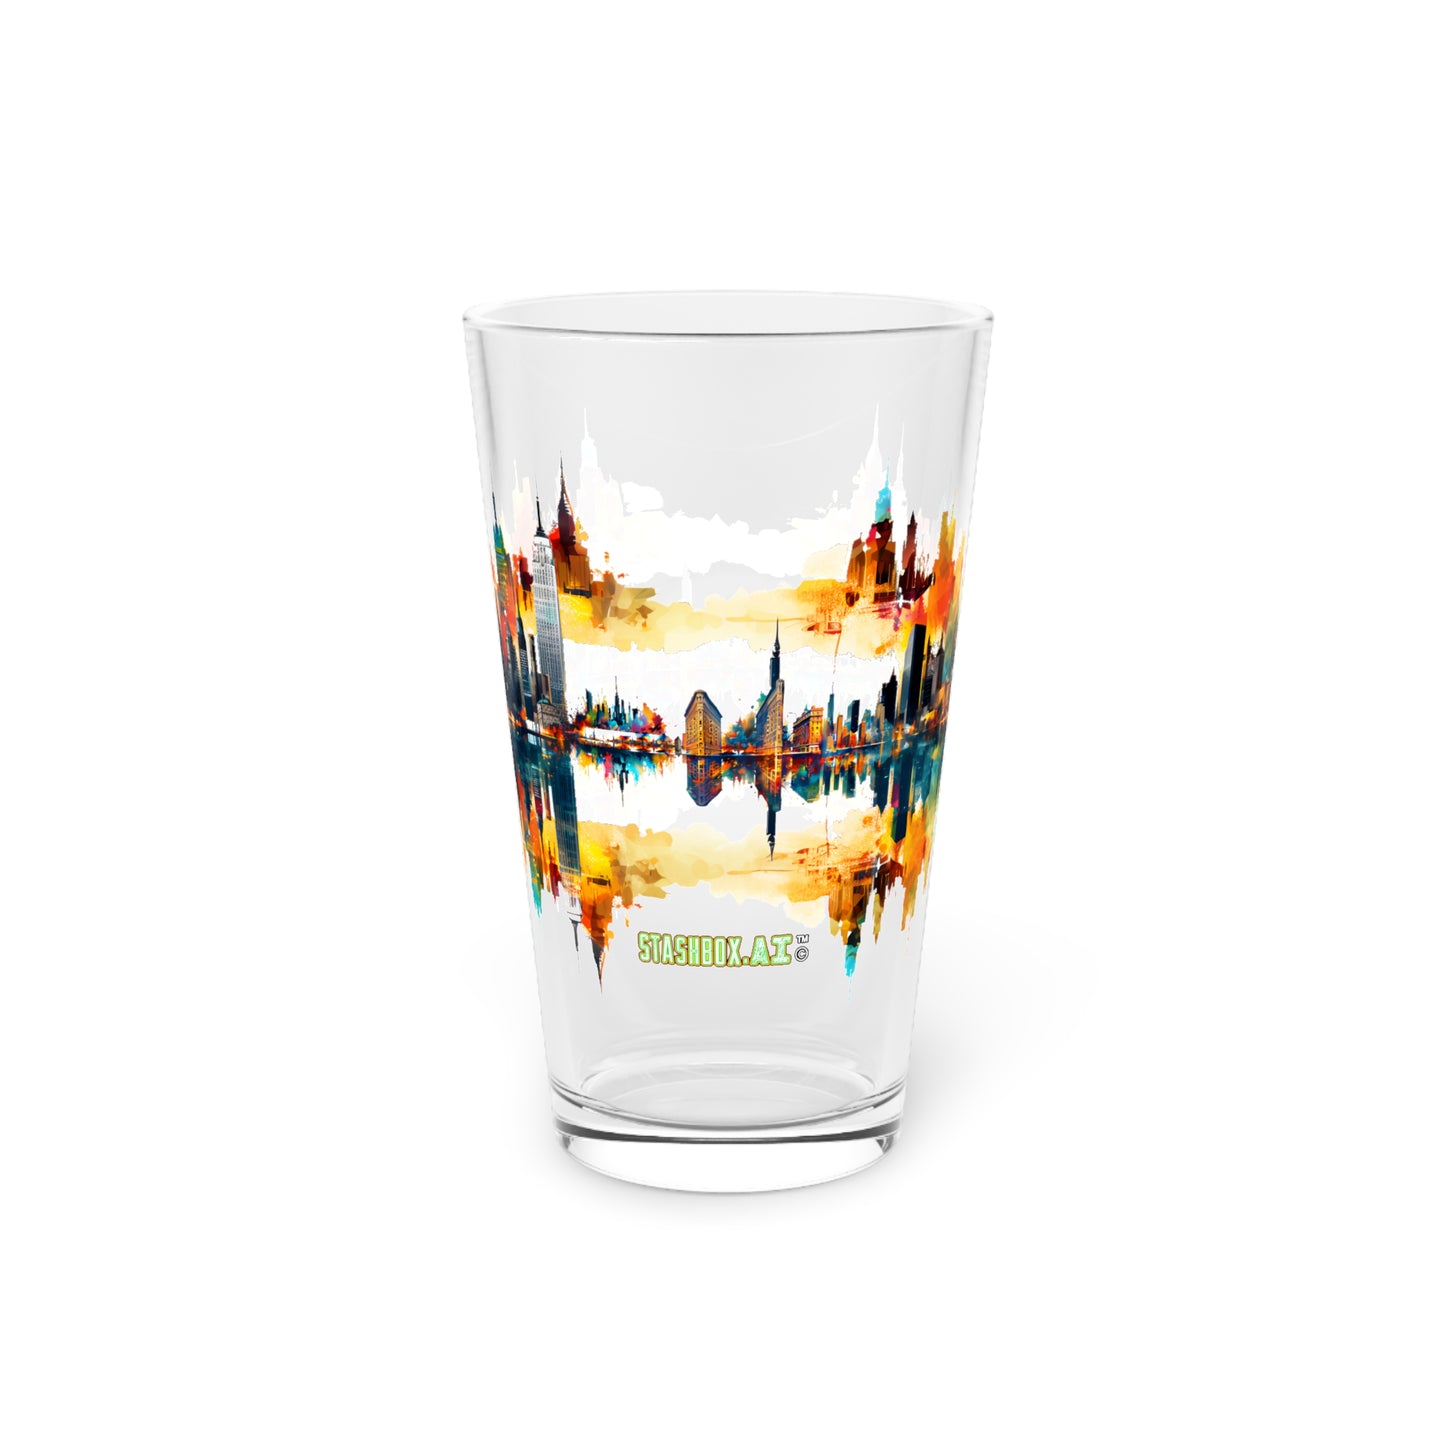 Cityscape Watercolor Pint Glass - Stashbox NYC Skyline Art